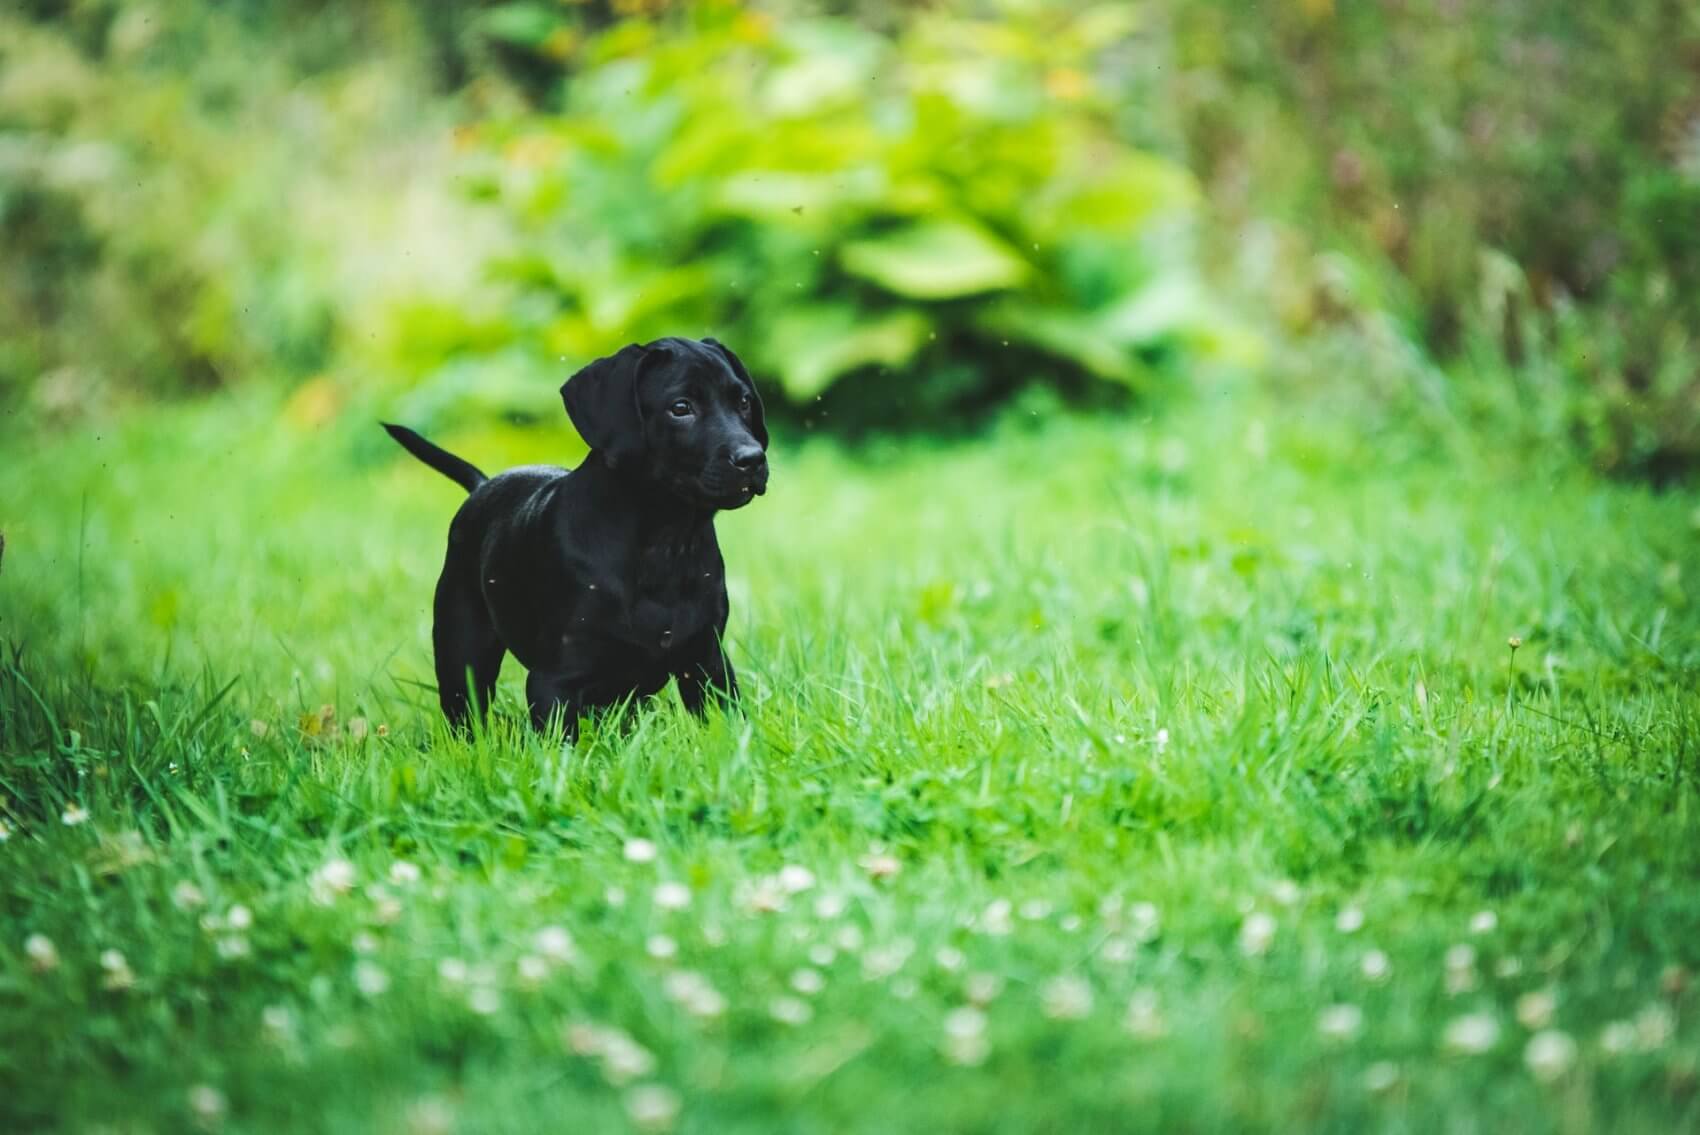 Small Black Puppy on Grass